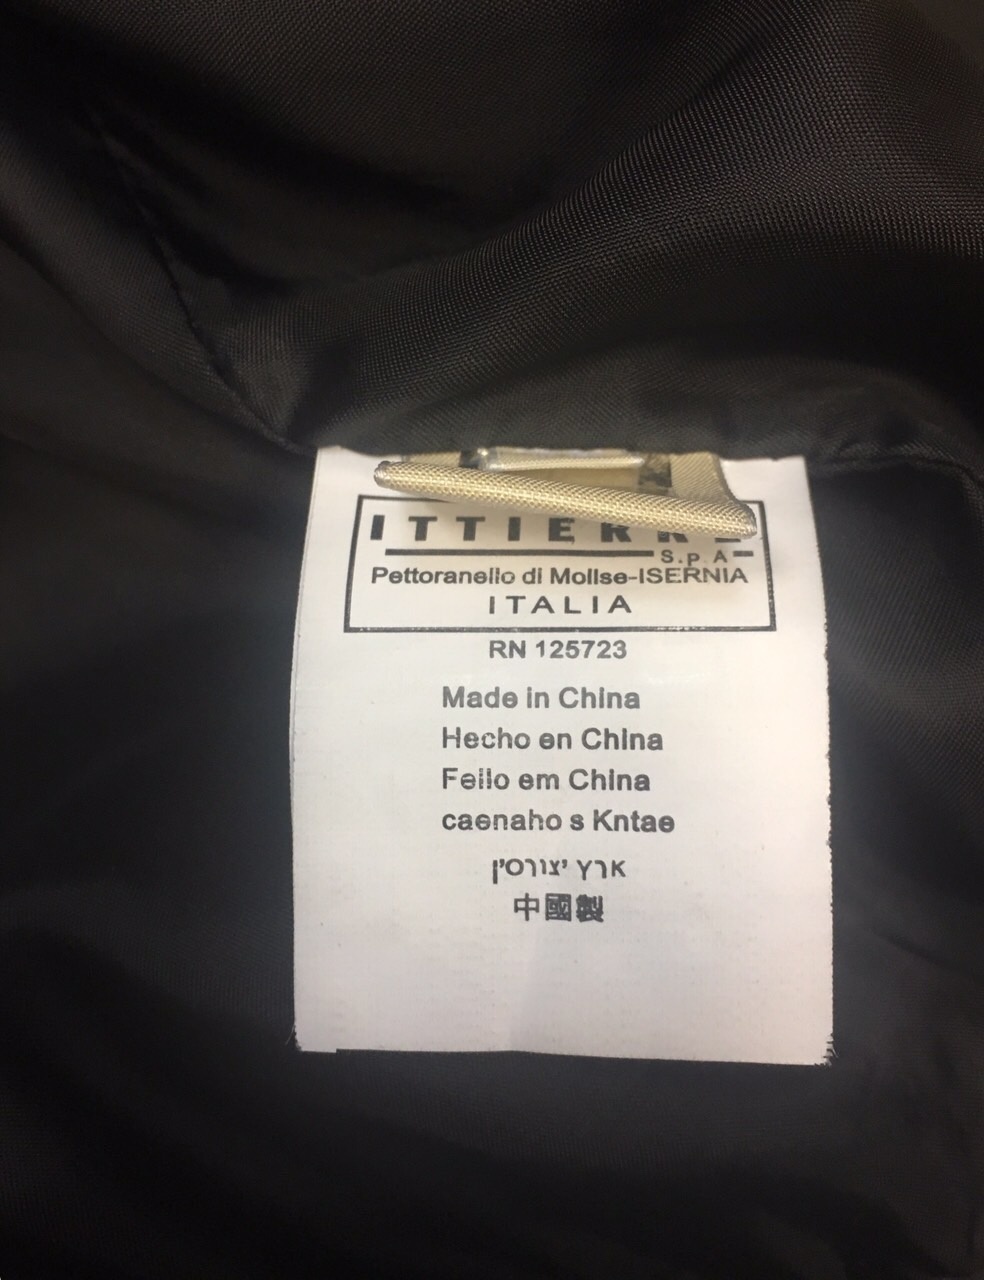 Куртка Galliano, 46-48 размеры